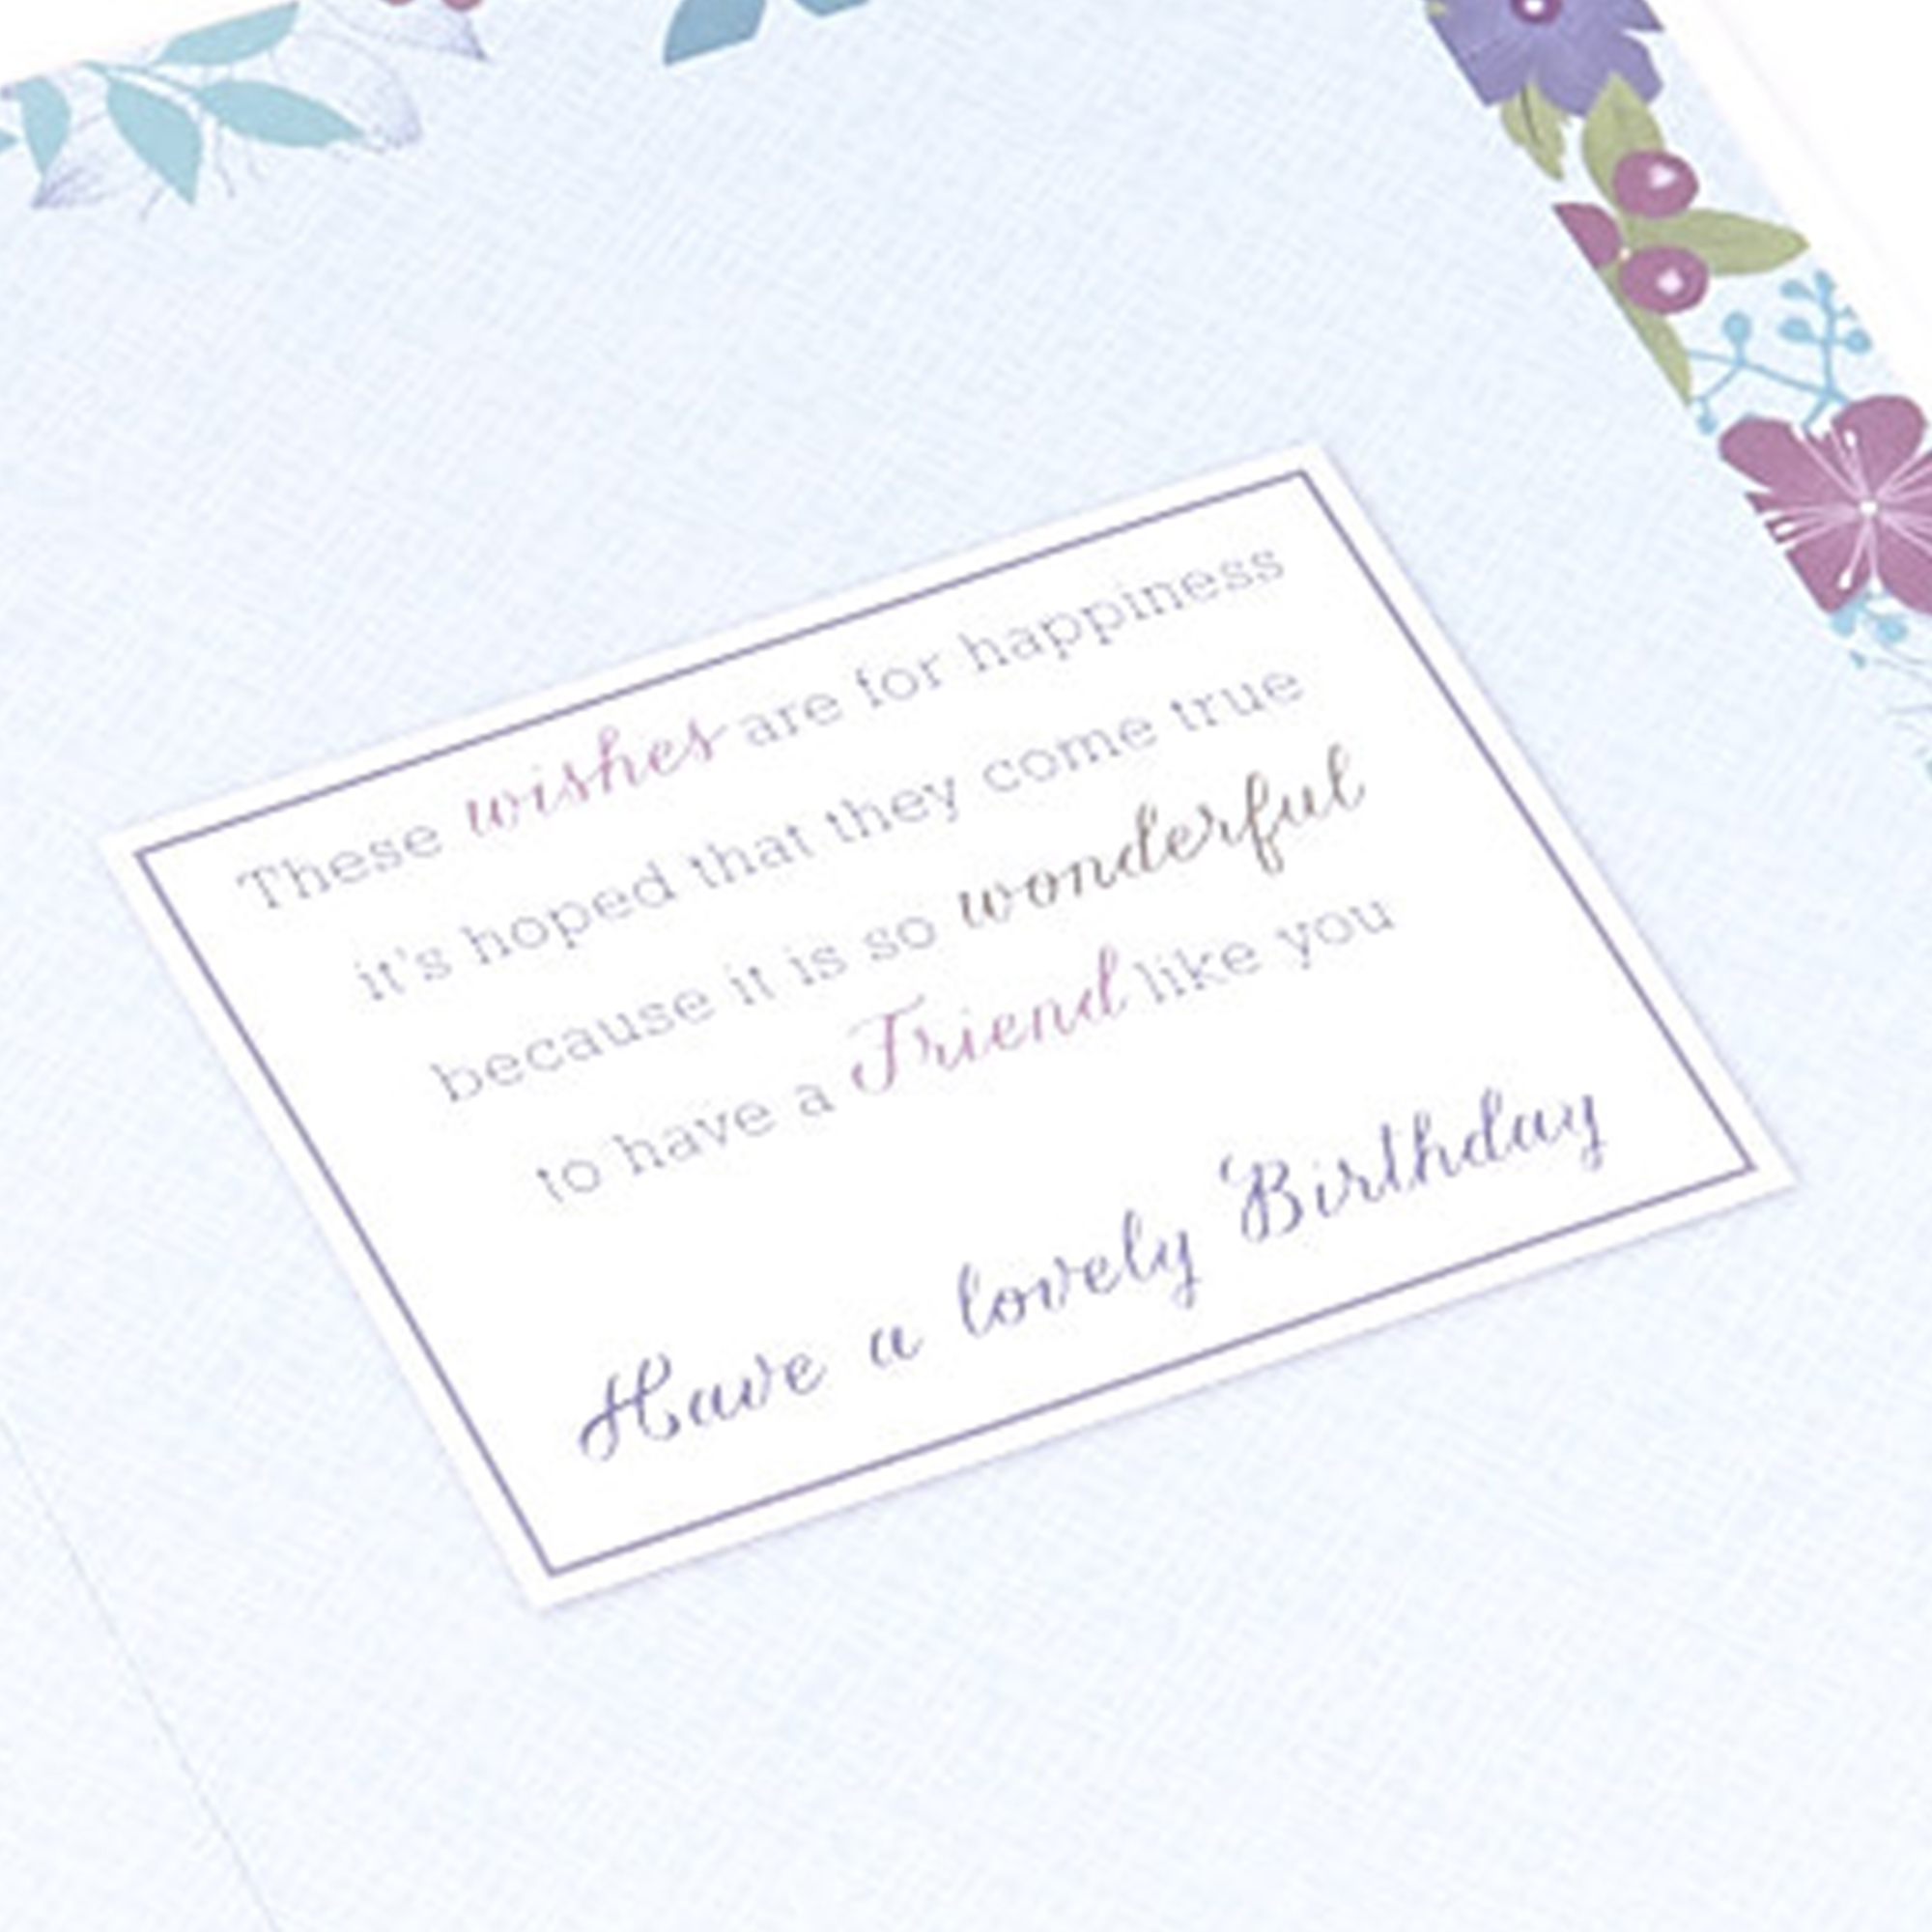 Birthday Special Friend Card - Floral Design